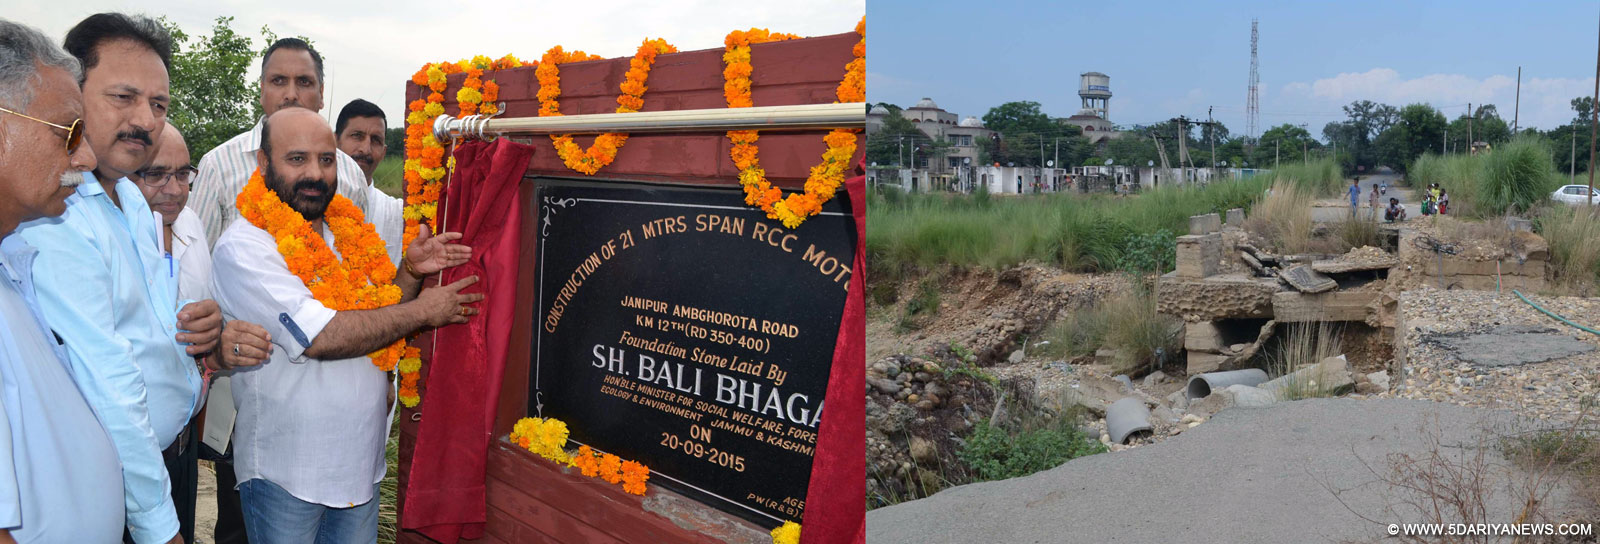 Bali Bhagat launches work of 21 mtrs span bridge on Janipur- Amb Ghrota road